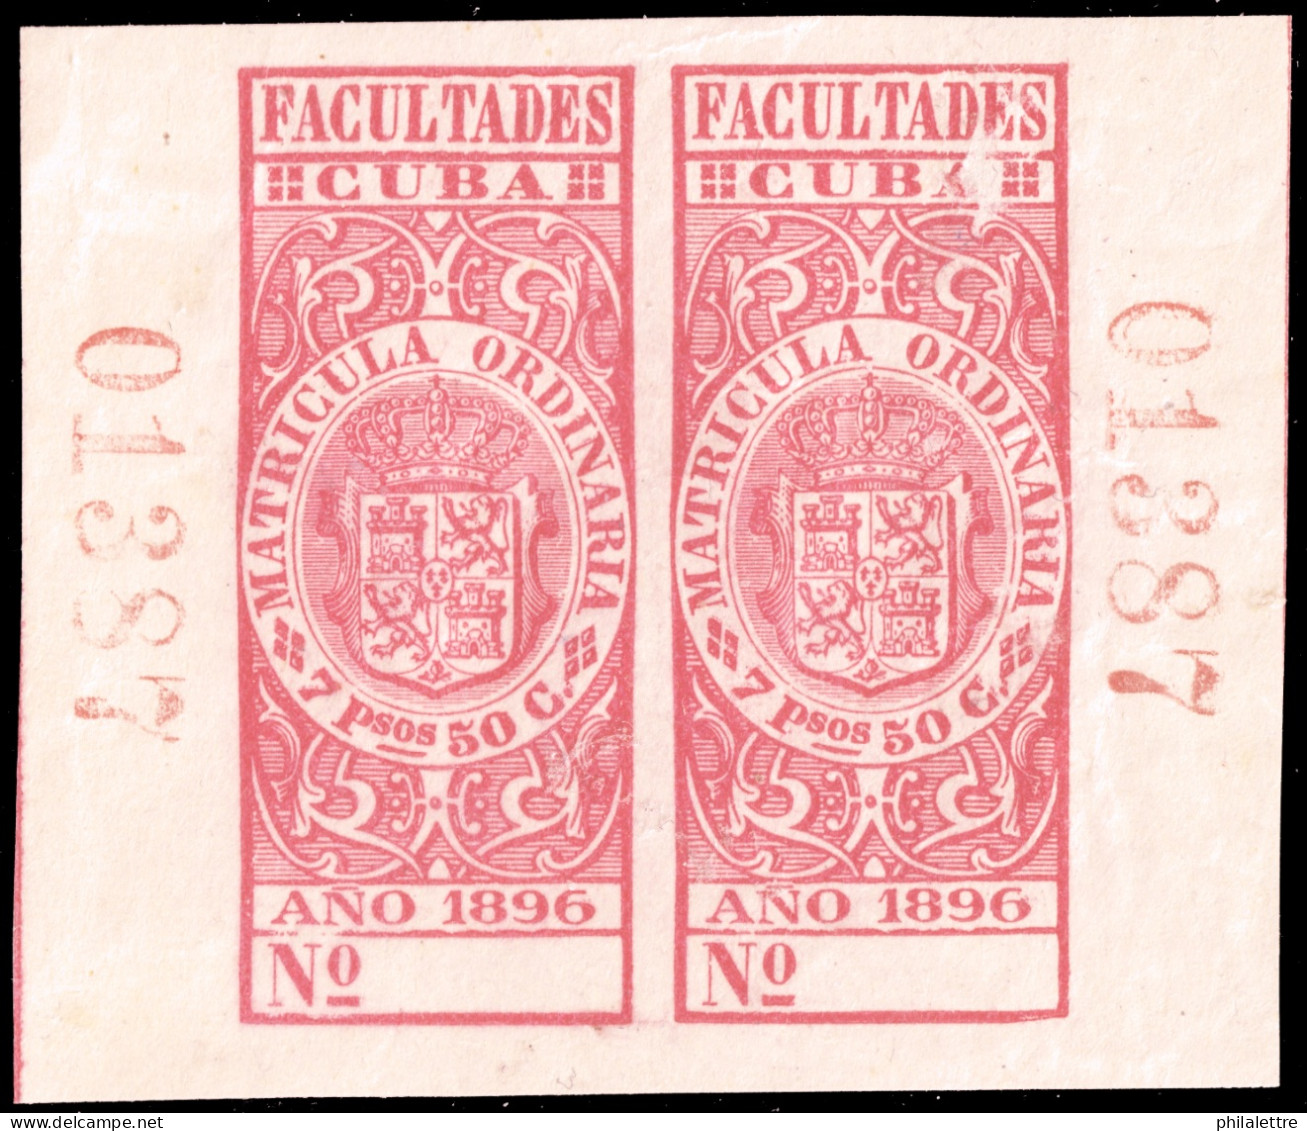 ESPAGNE / ESPANA - COLONIAS (Cuba) 1896 Matricula Ordinaria "FACULTADES" Fulcher 1065 2x 7P50 Rosa (n°01387) - Nuevo* - Cuba (1874-1898)